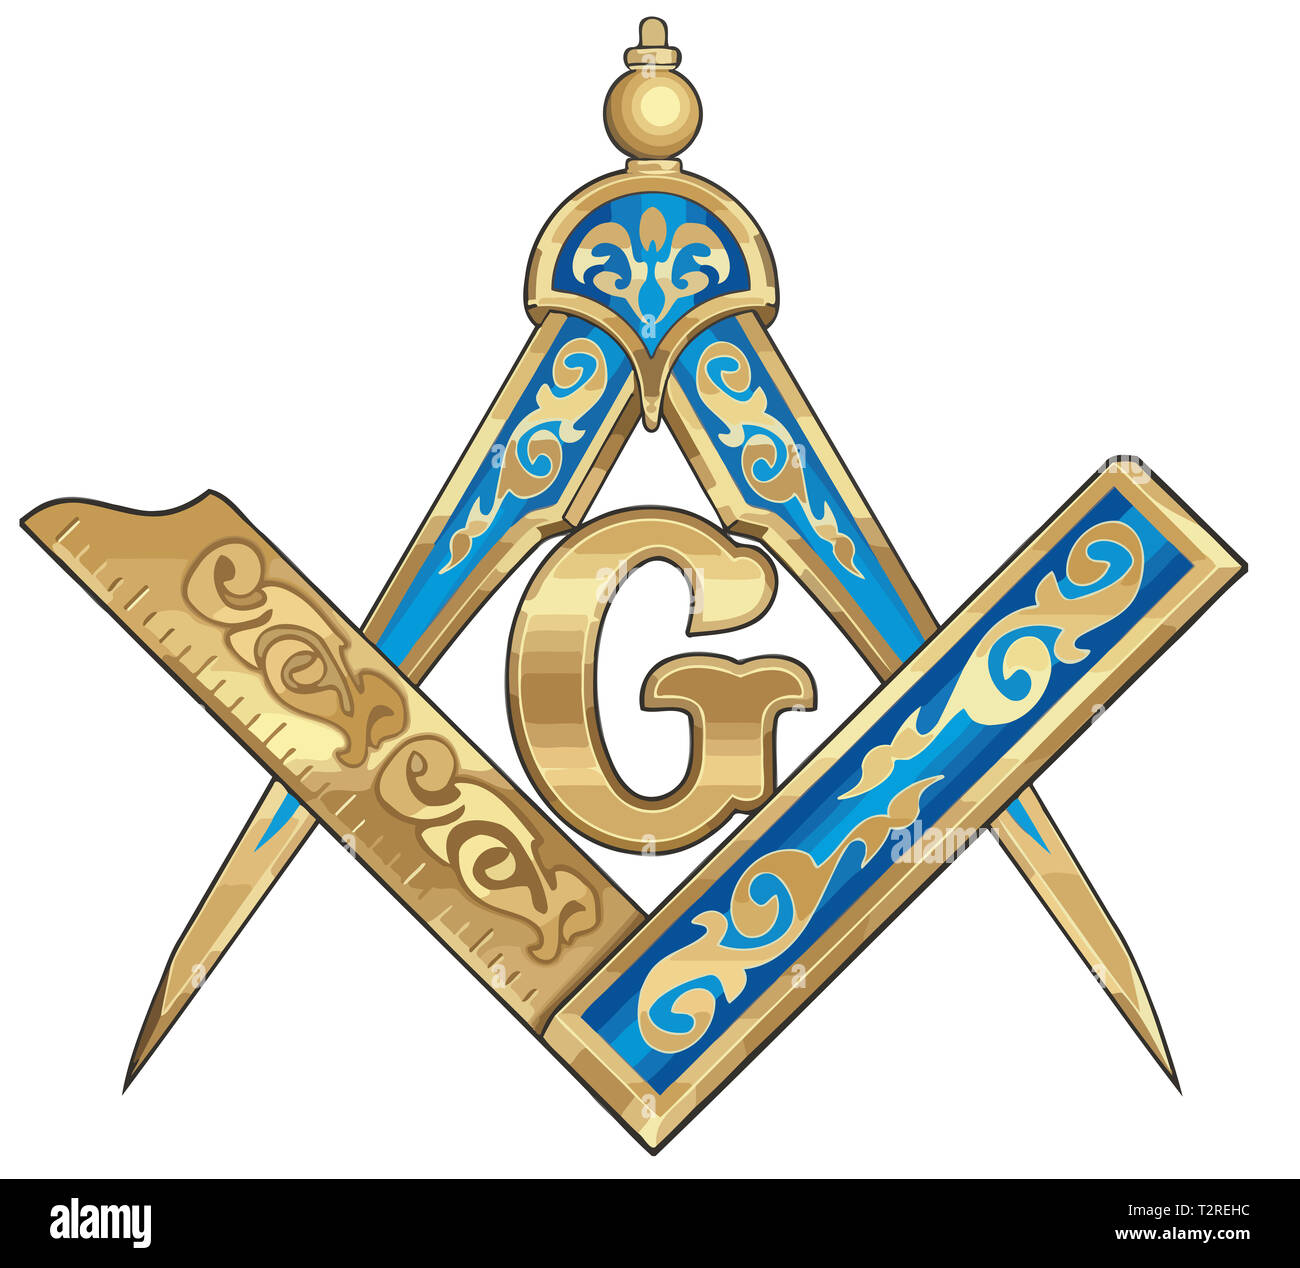 Masonic Tie with Masonic Symbols Square compass NT090 